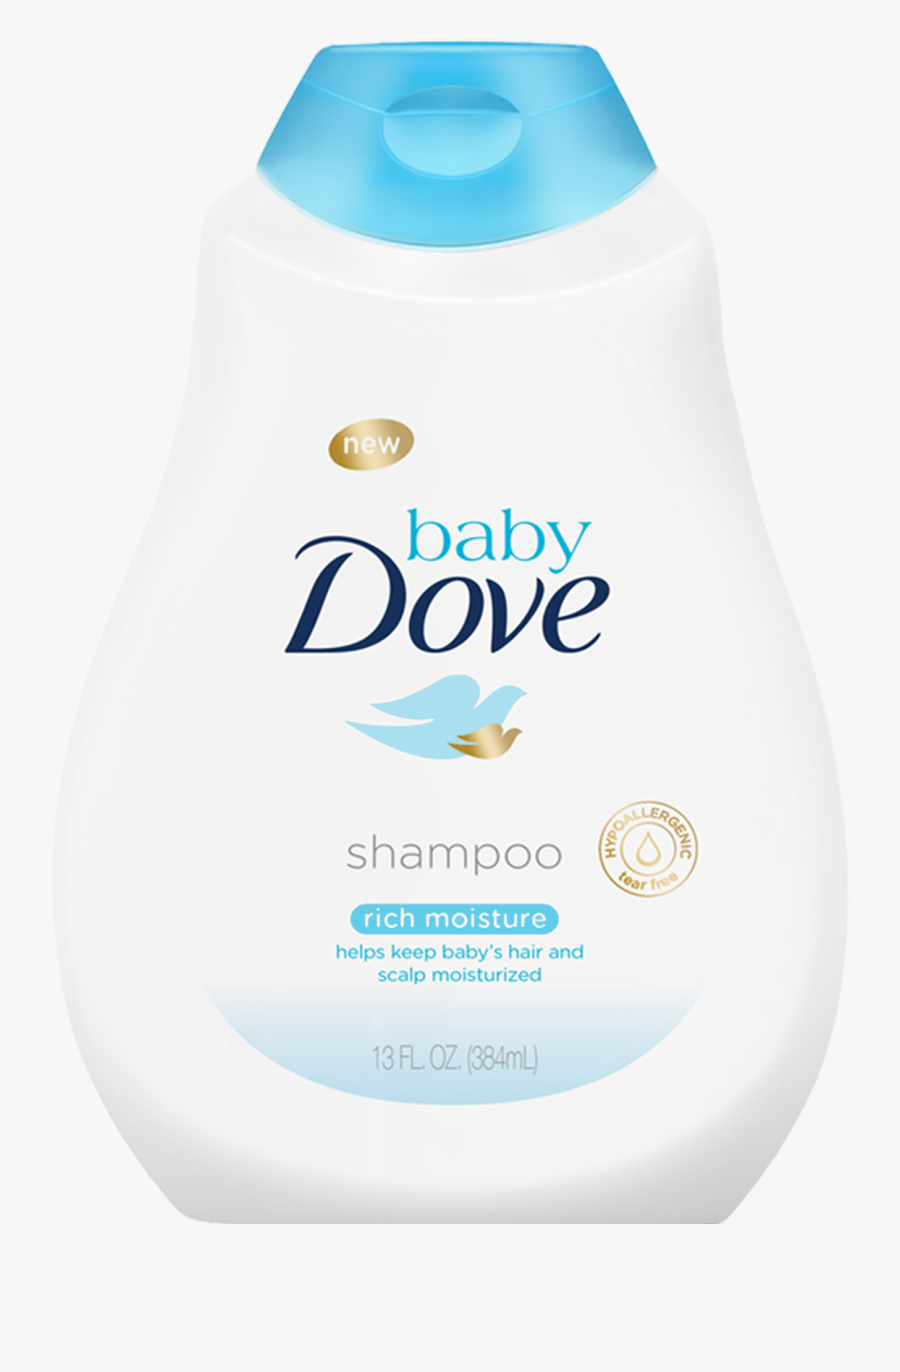 Baby Dove Shampoo Price, Transparent Clipart